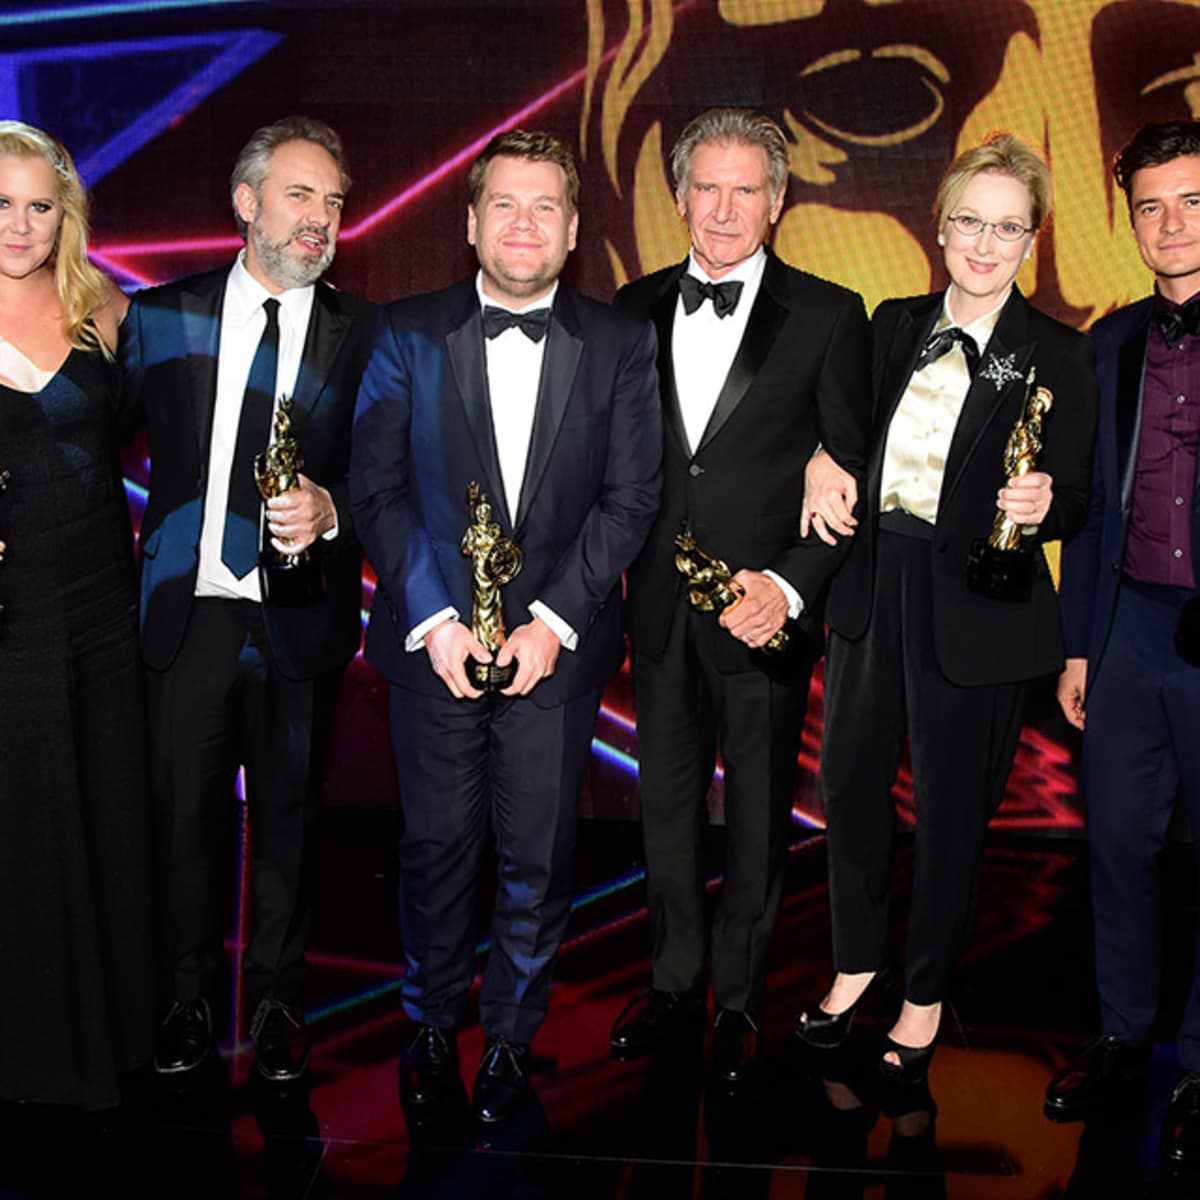 All 2019 BAFTA Games Awards winners